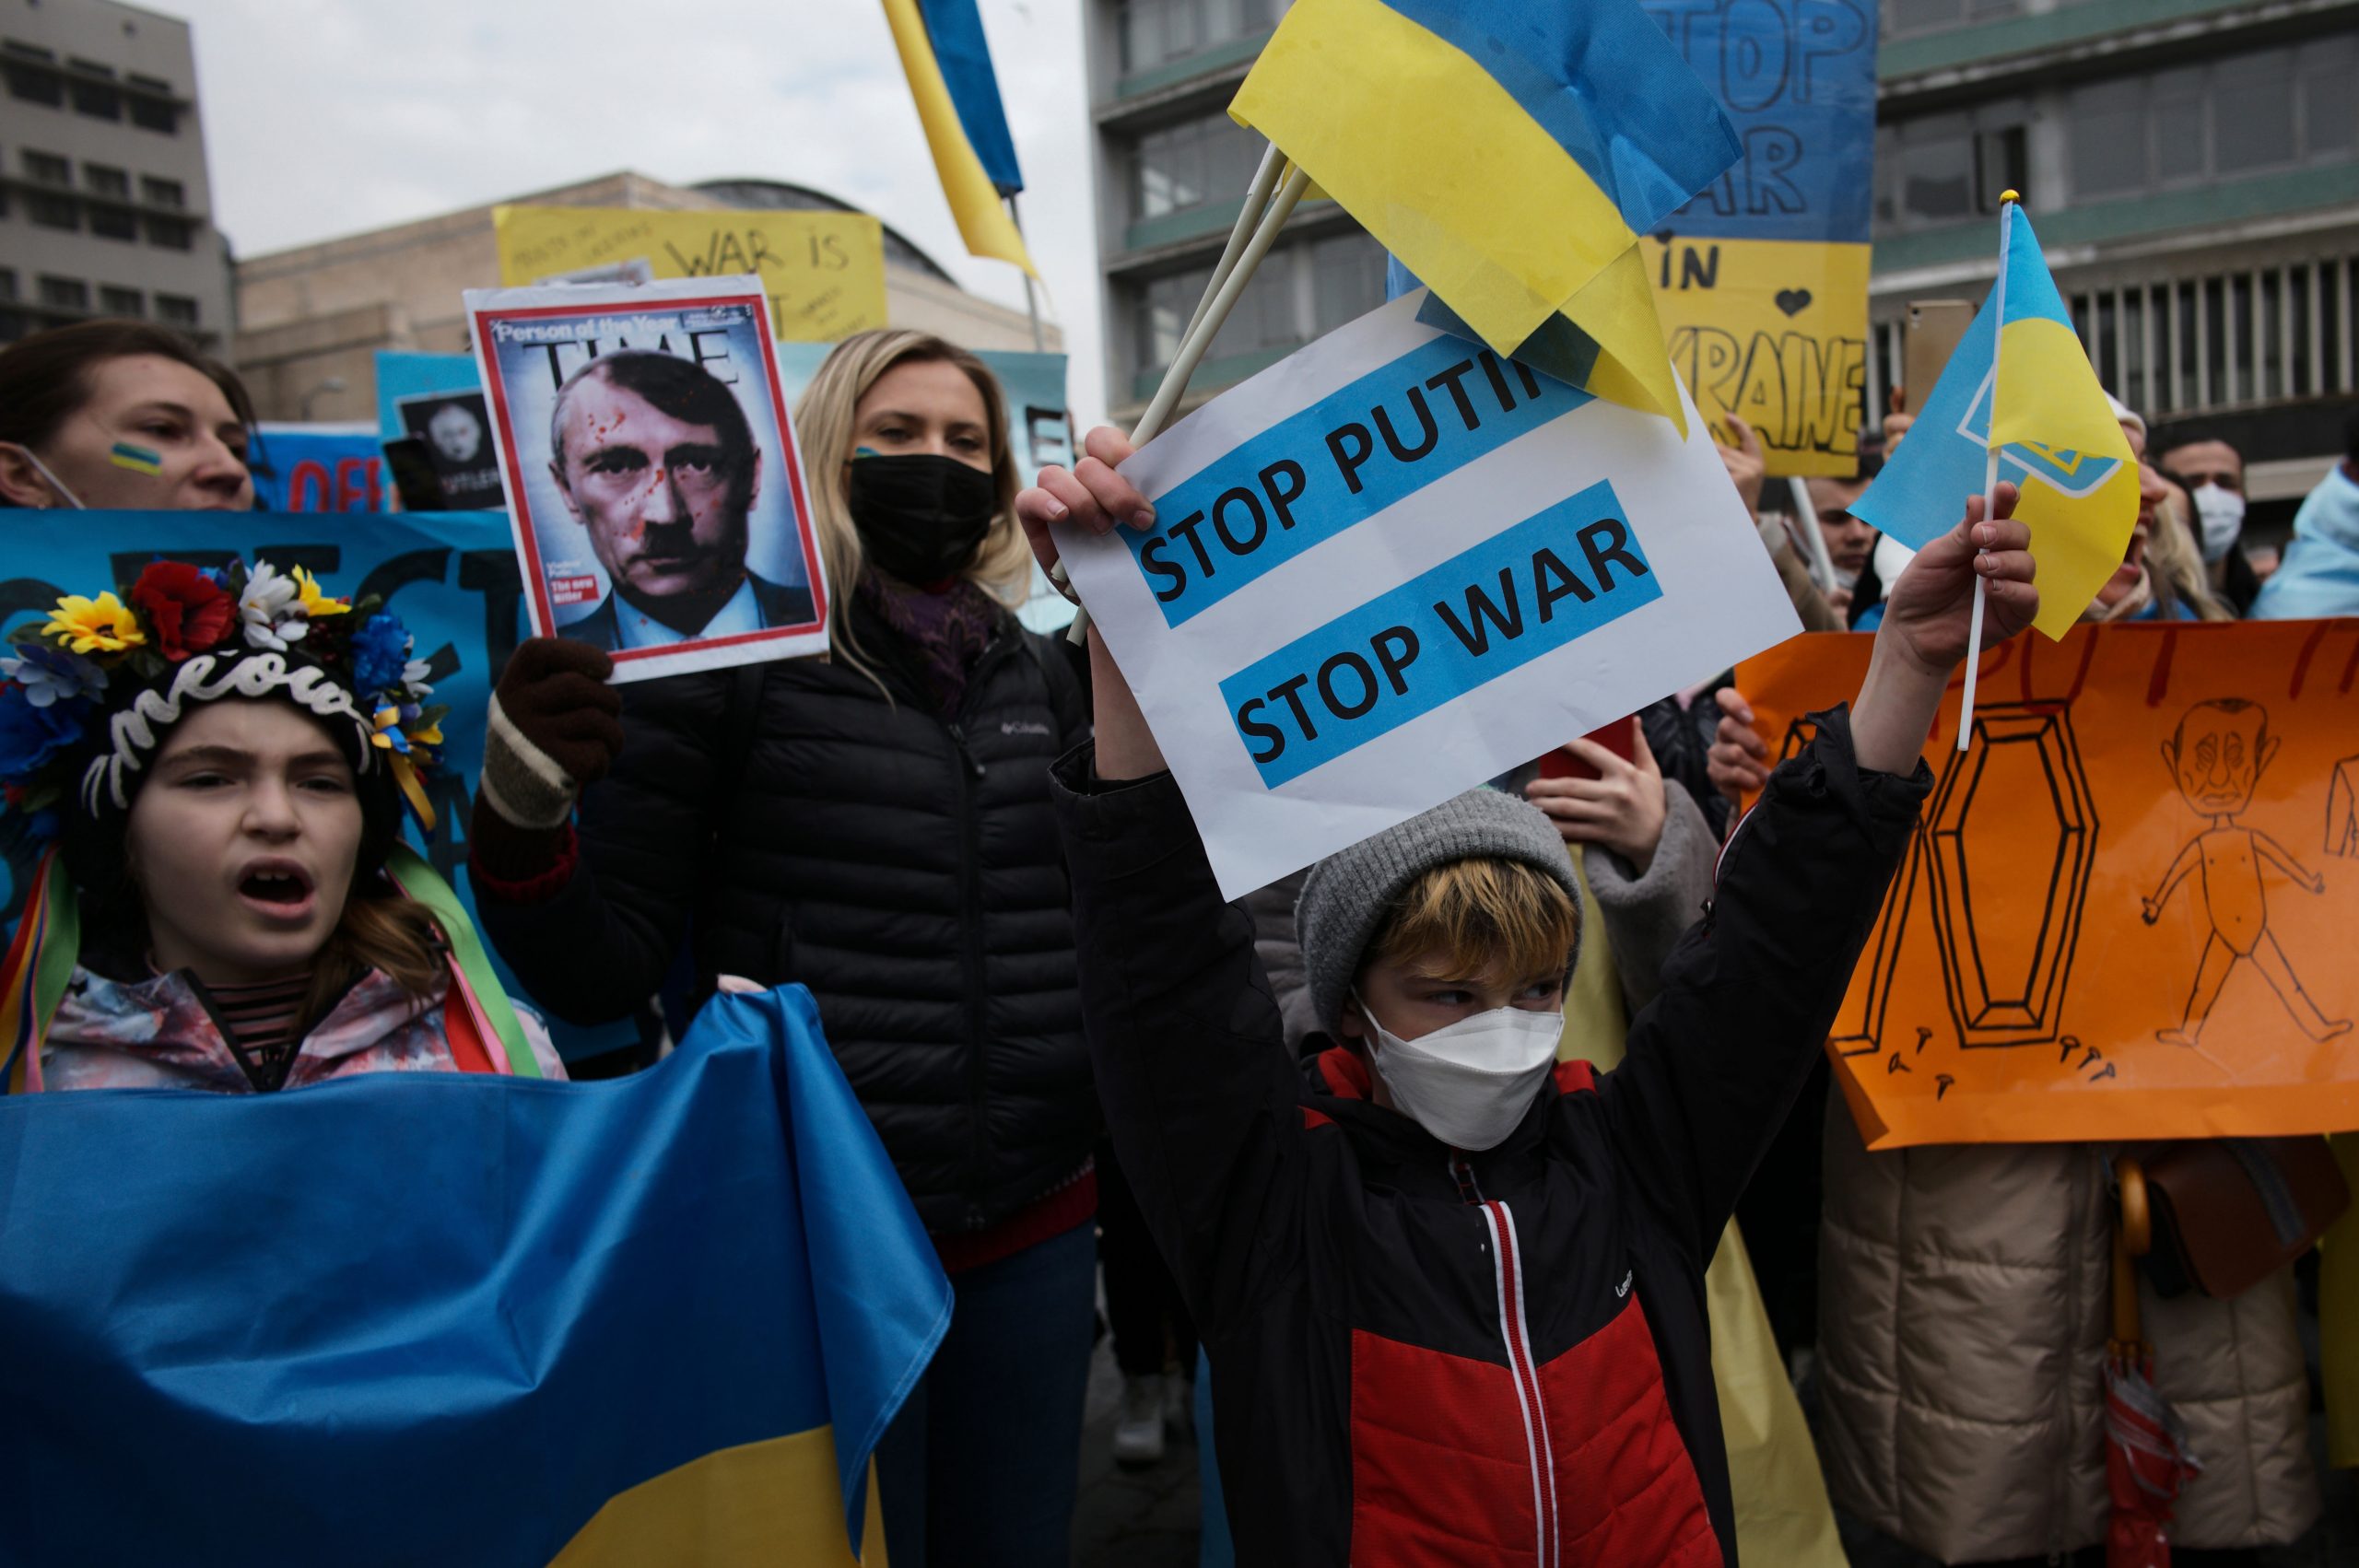 ICC prosecutor to open investigation into war crimes in Ukraine